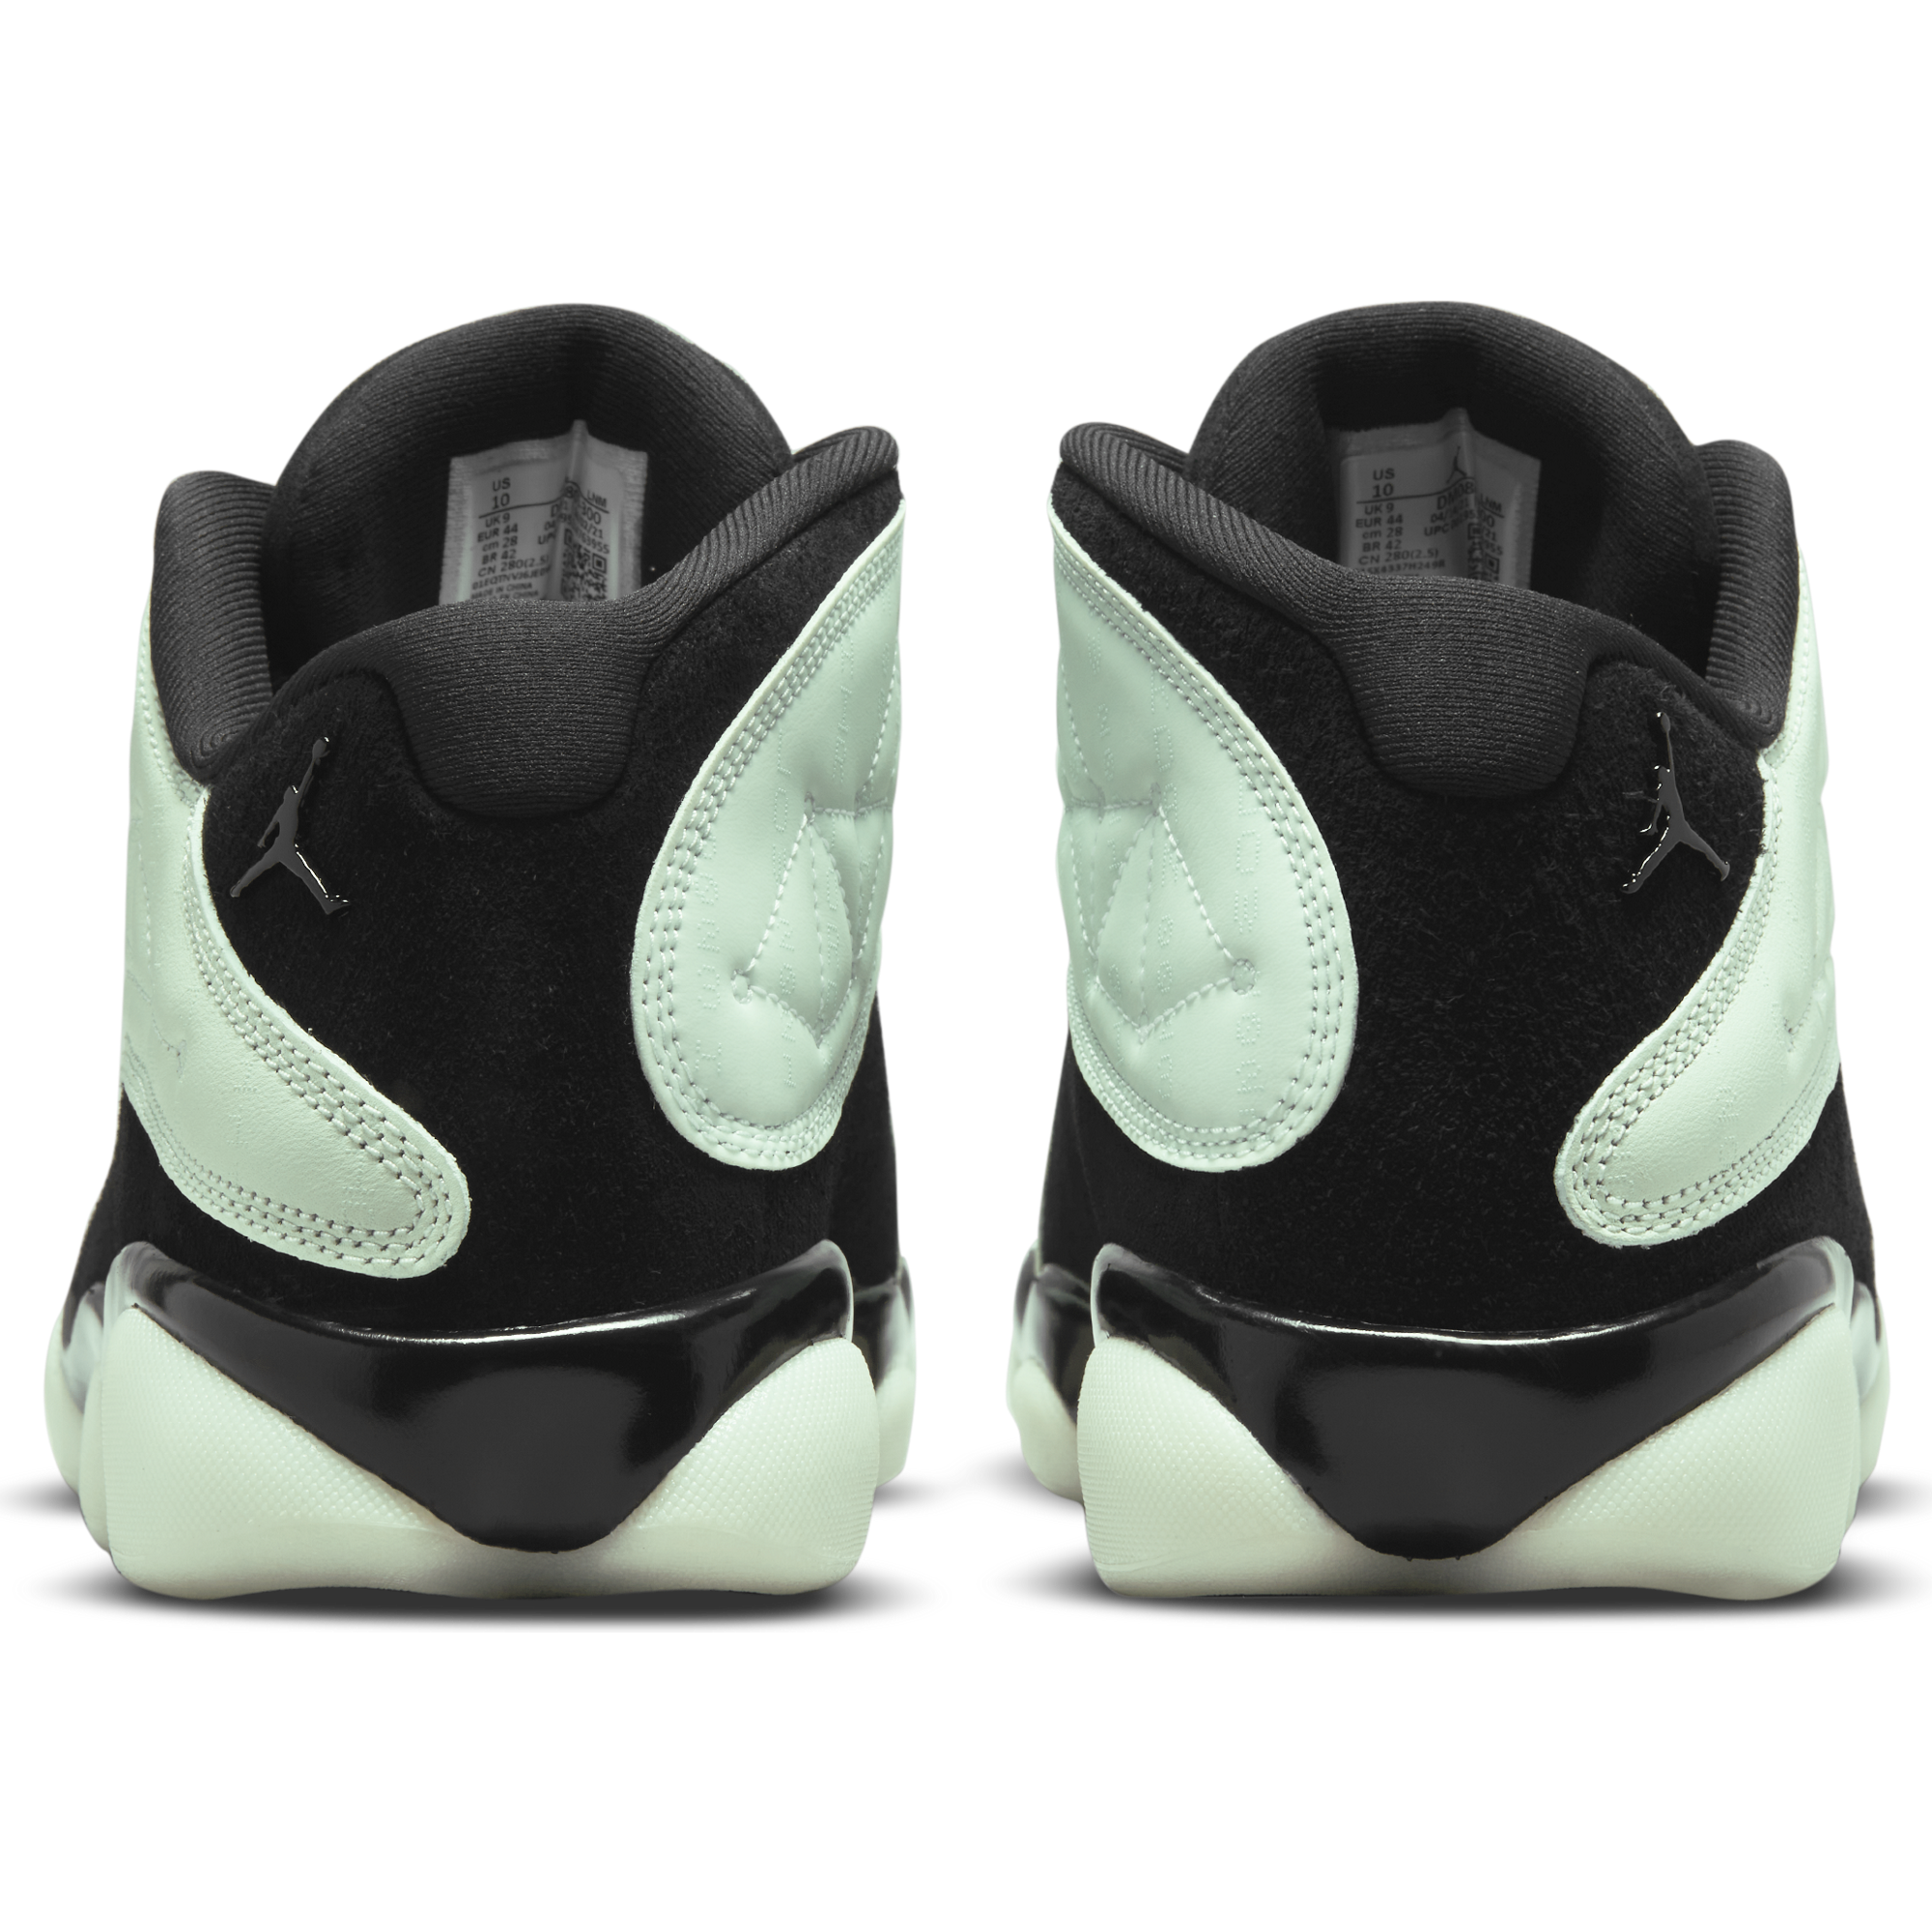 Buy the Air Jordan Flight 97 Black White Men's Shoe Size 11.5